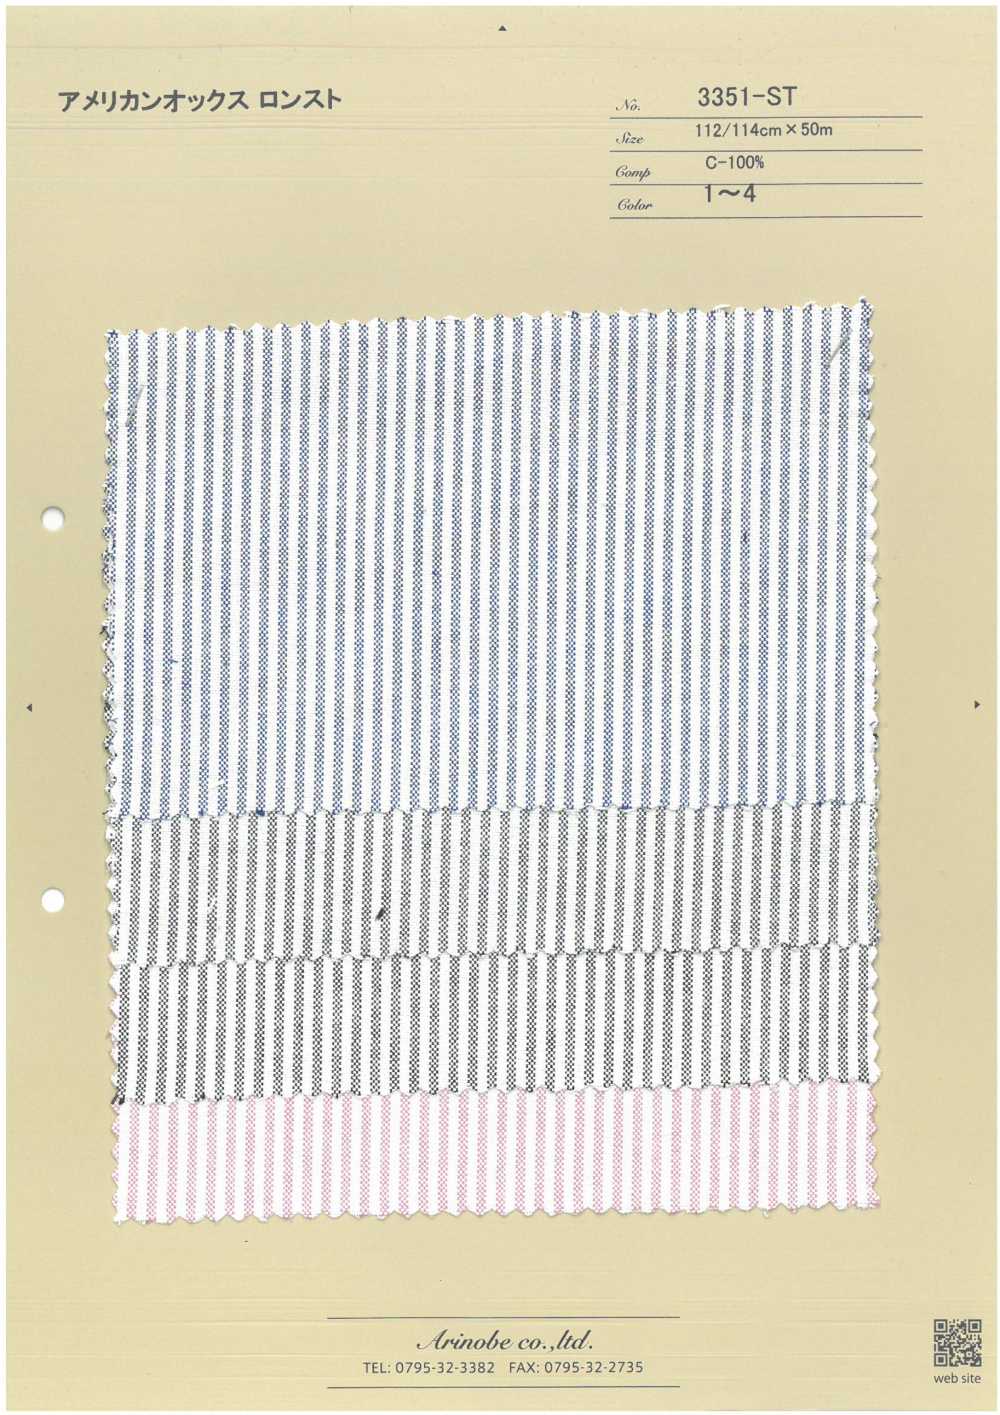 3351-ST Oxford Américain[Fabrication De Textile] ARINOBE CO., LTD.